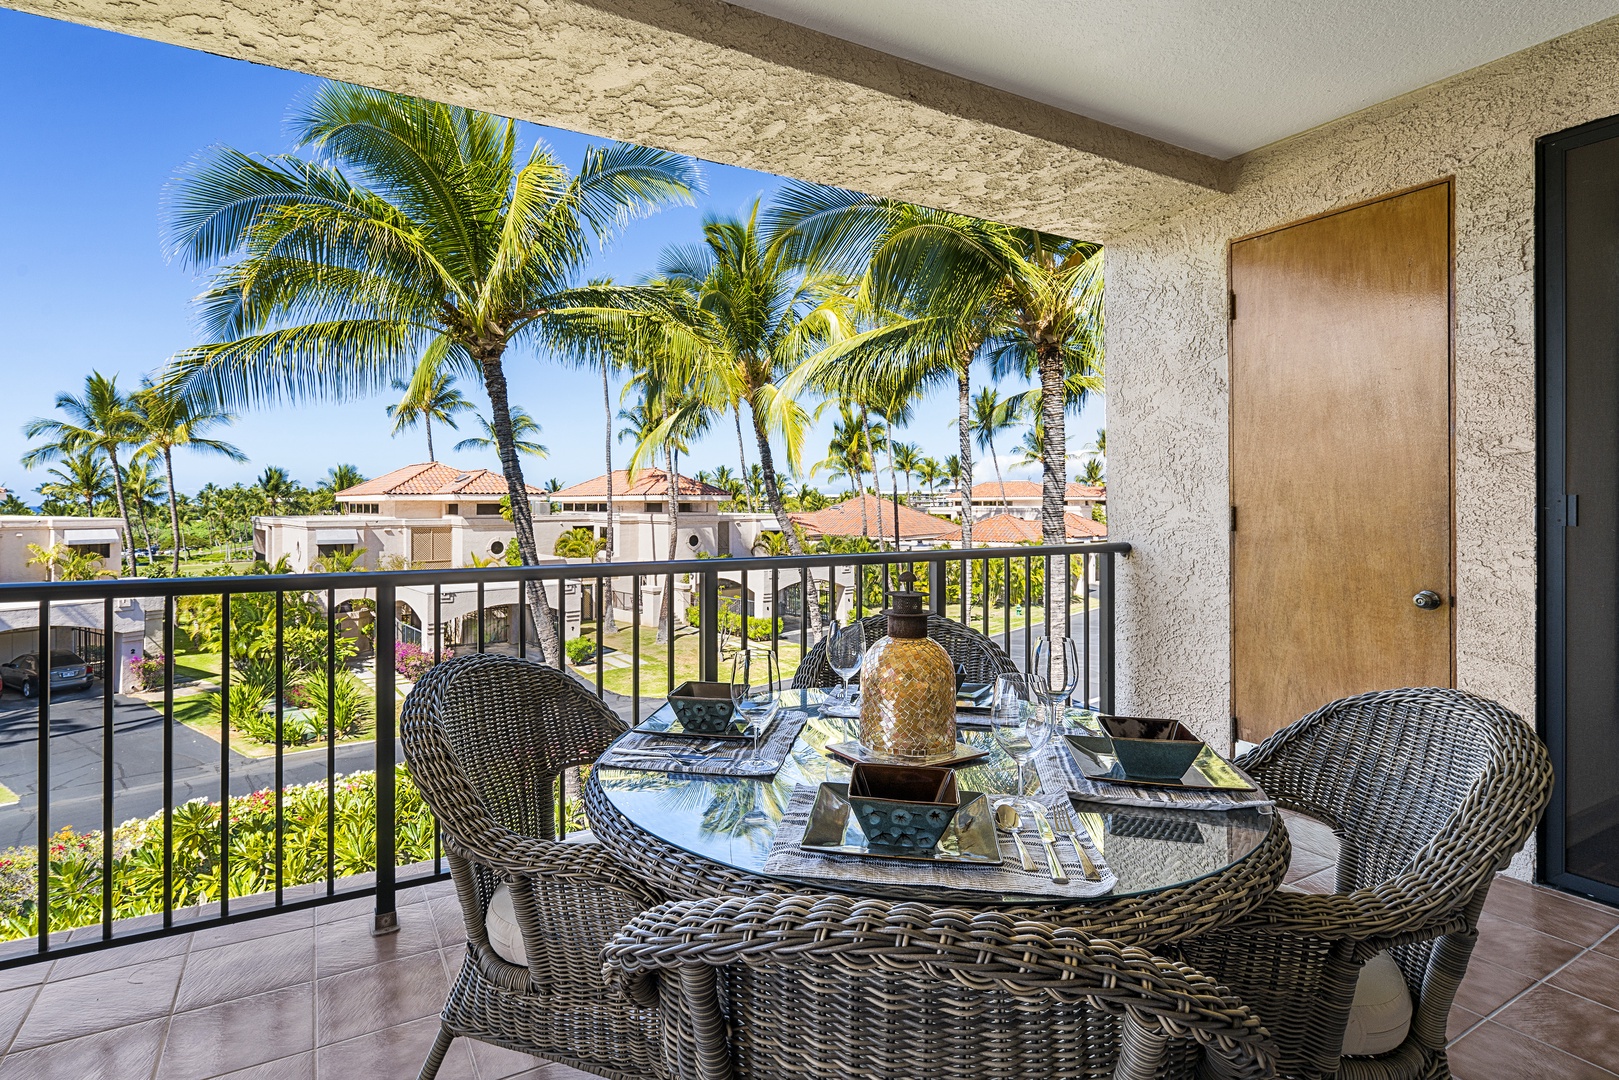 Waikoloa Vacation Rentals, Shores at Waikoloa Beach Resort 332 - Tropical views in every direction!